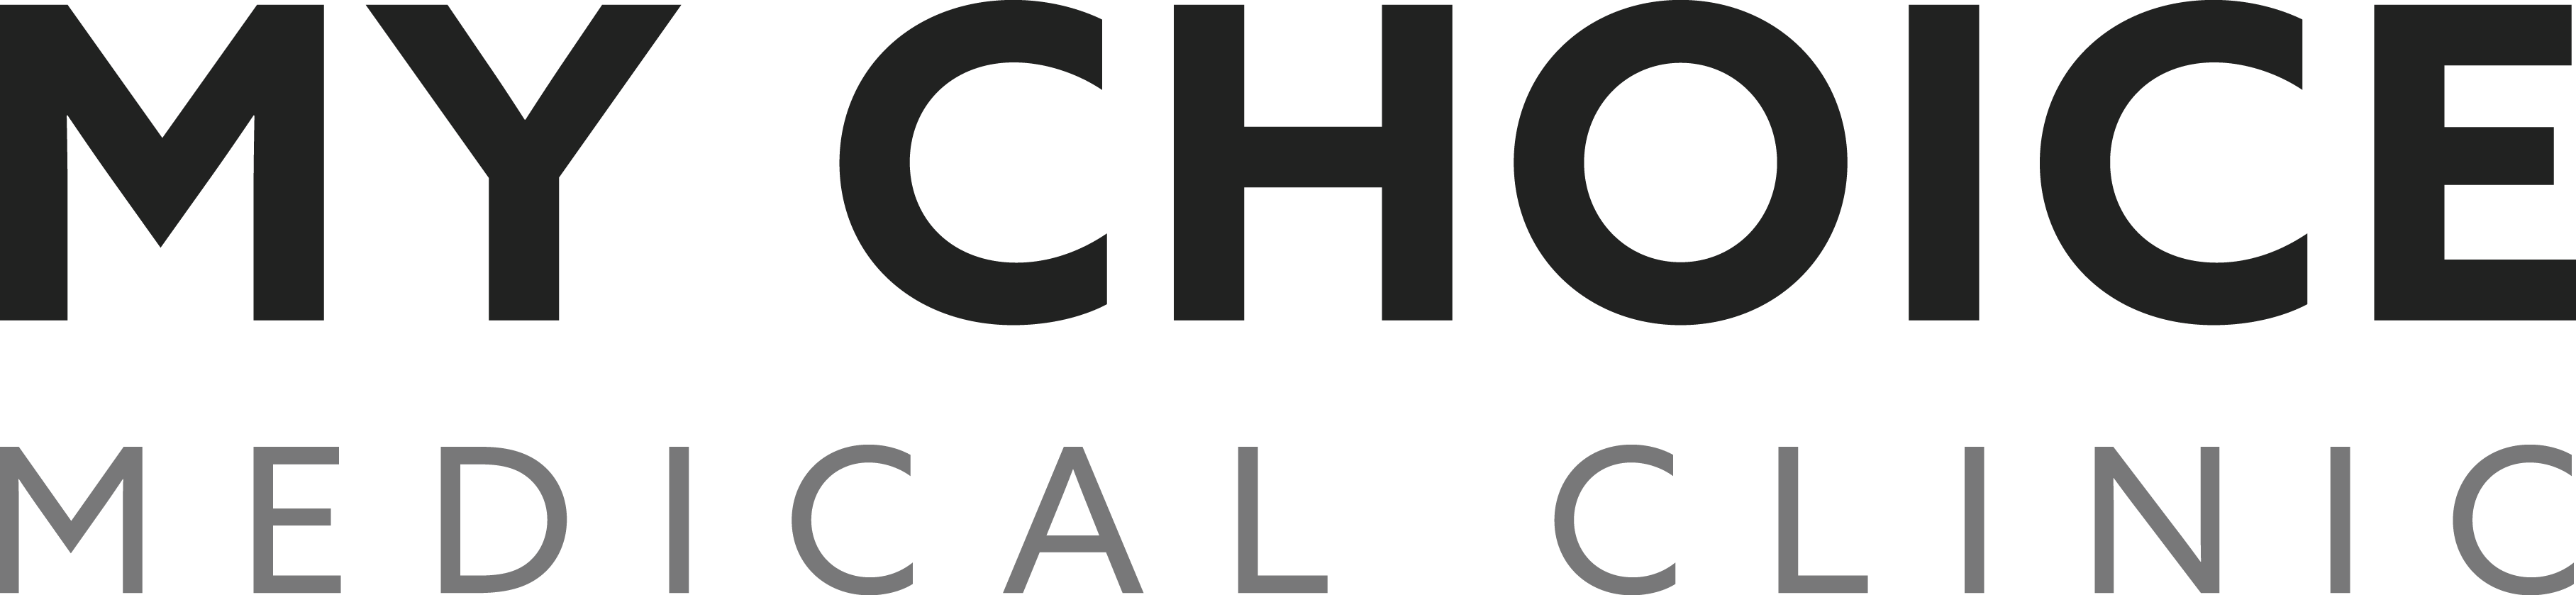 Mychoice Logo Black